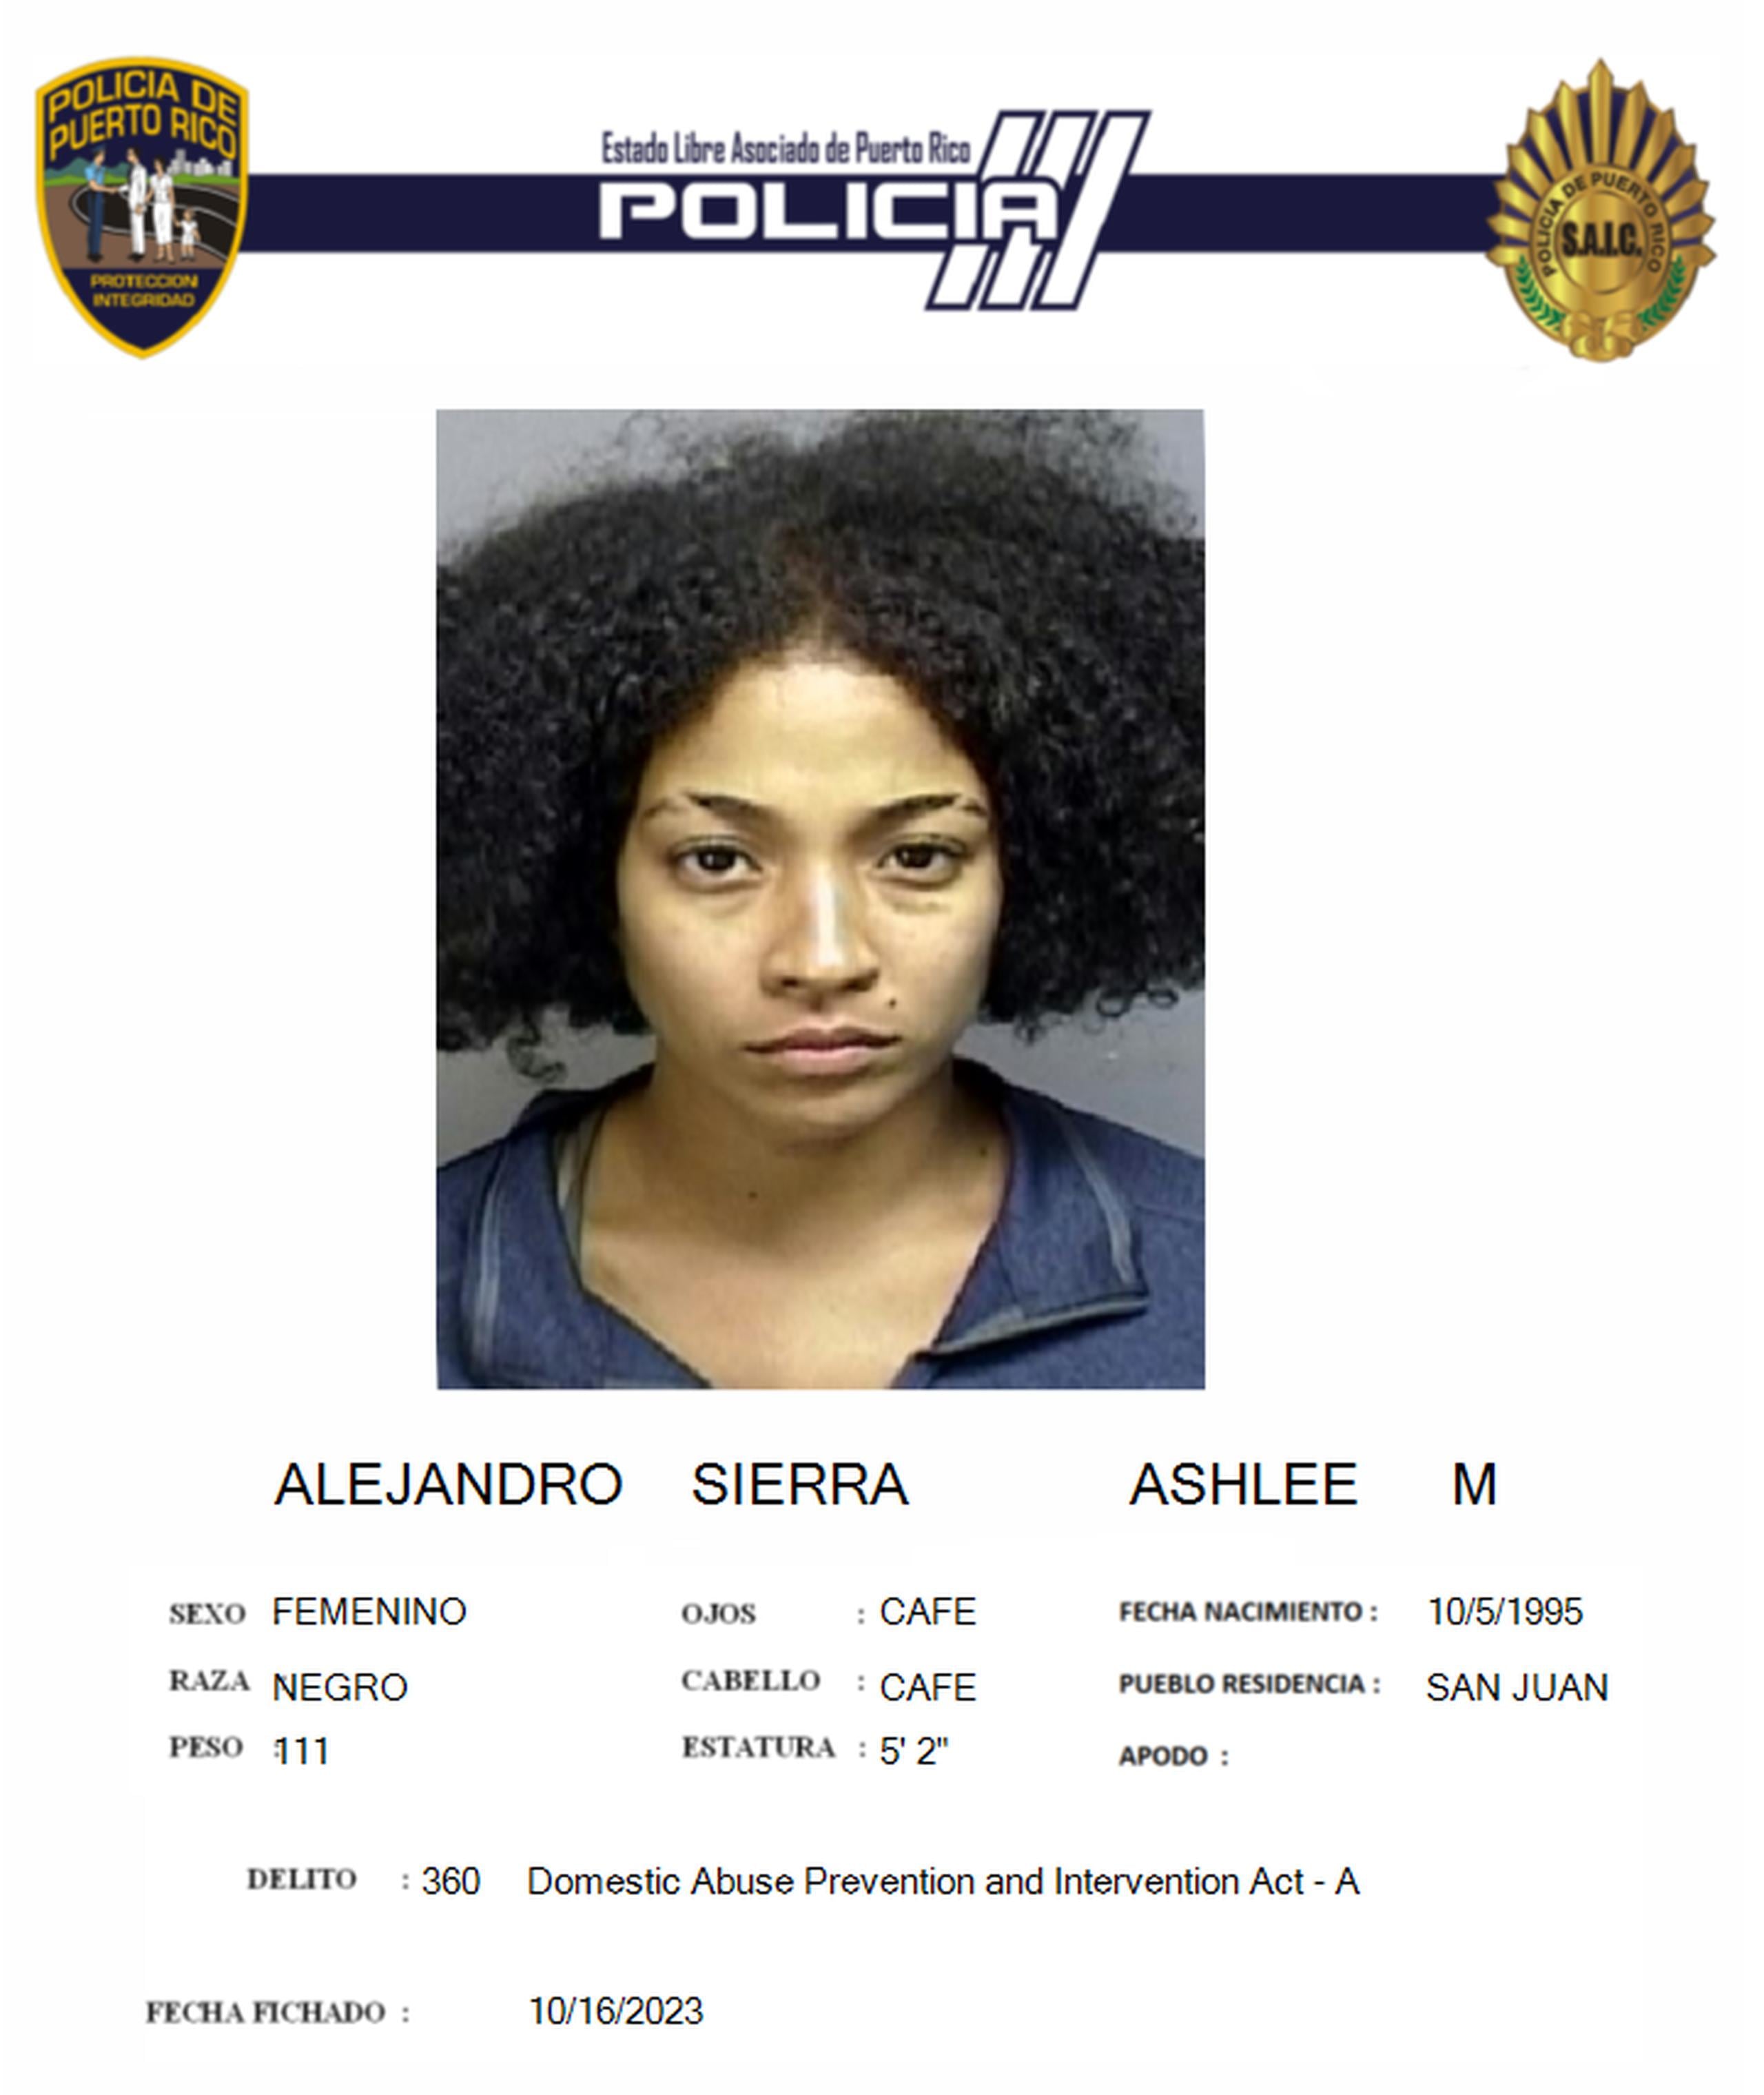 Ashlee M. Alejandro Sierra enfrenta cargos por violencia doméstica.